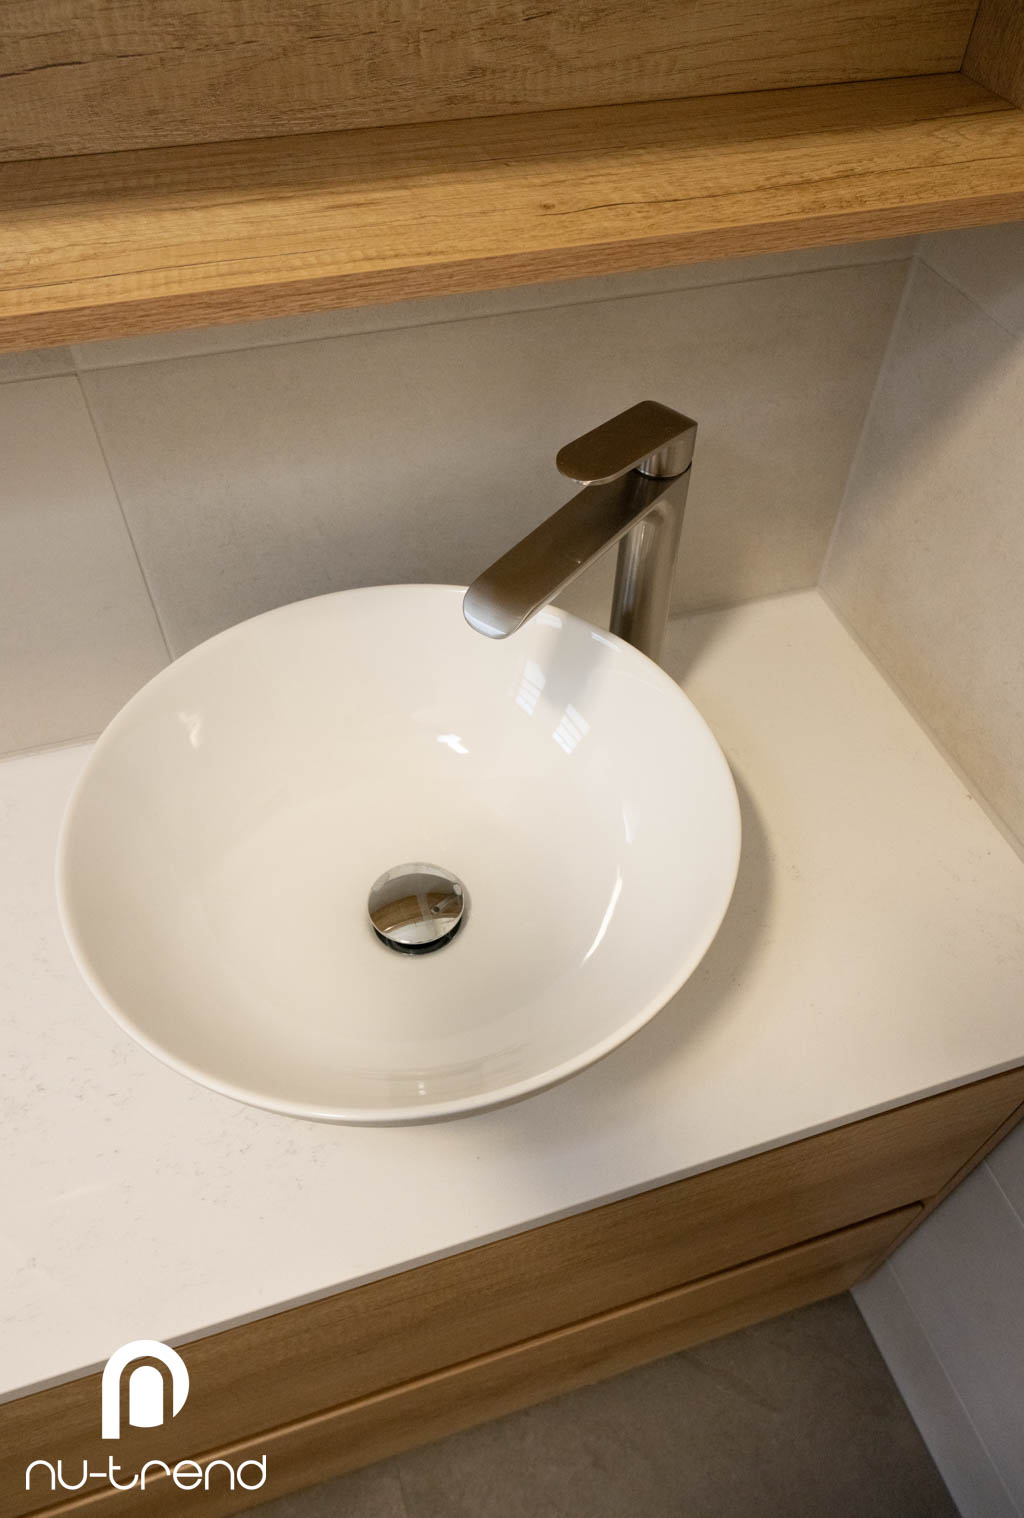 Complete bathroom renovation Maroubra Sydney round sink